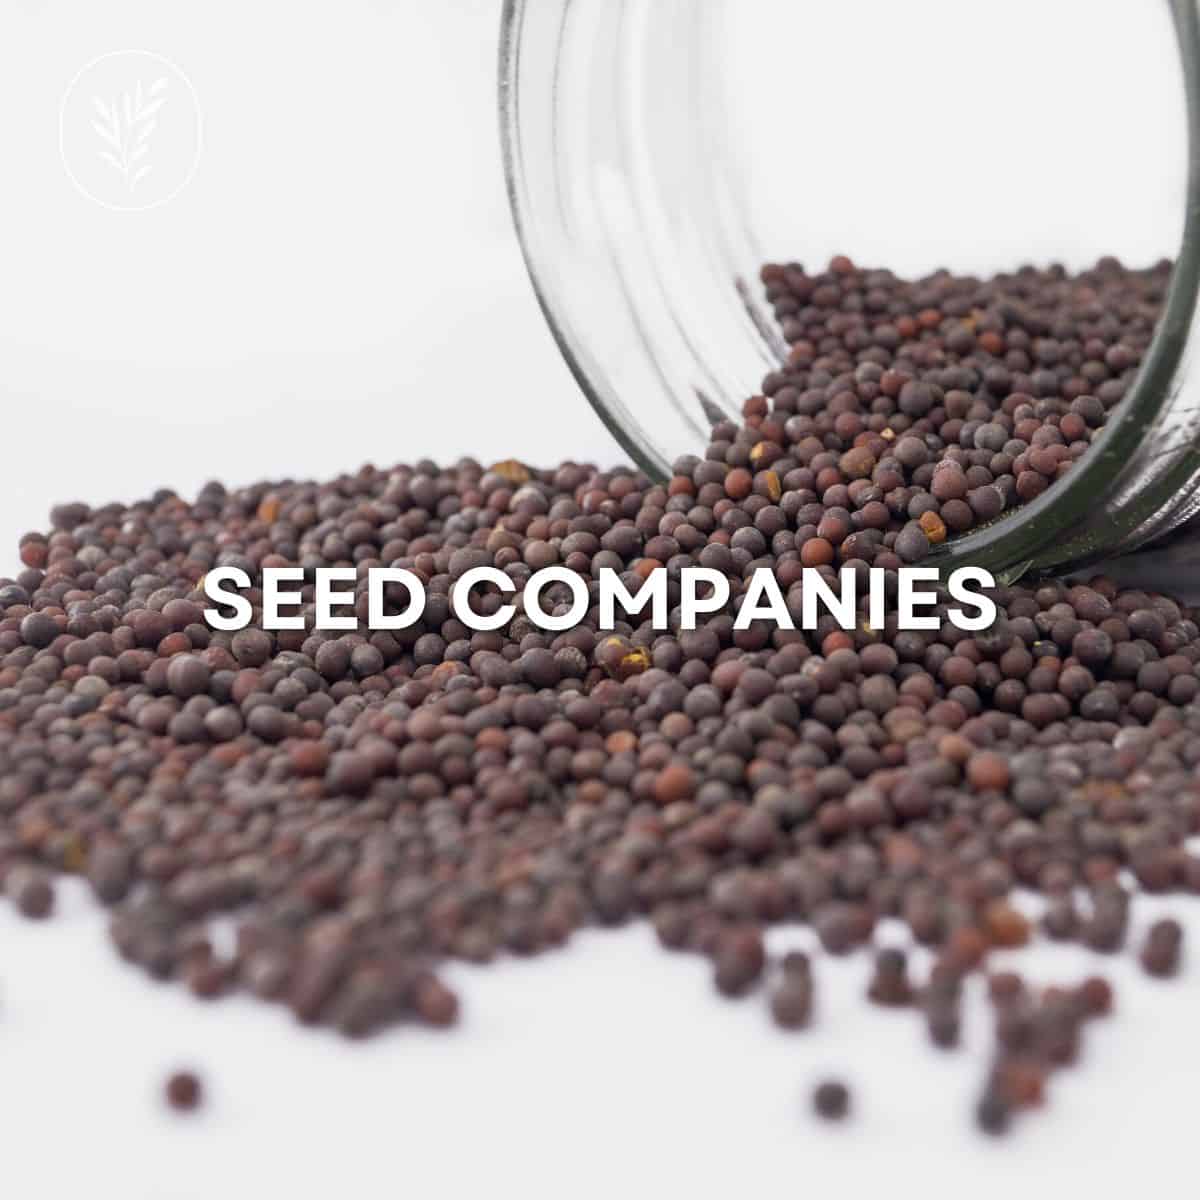 Seed companies via @home4theharvest